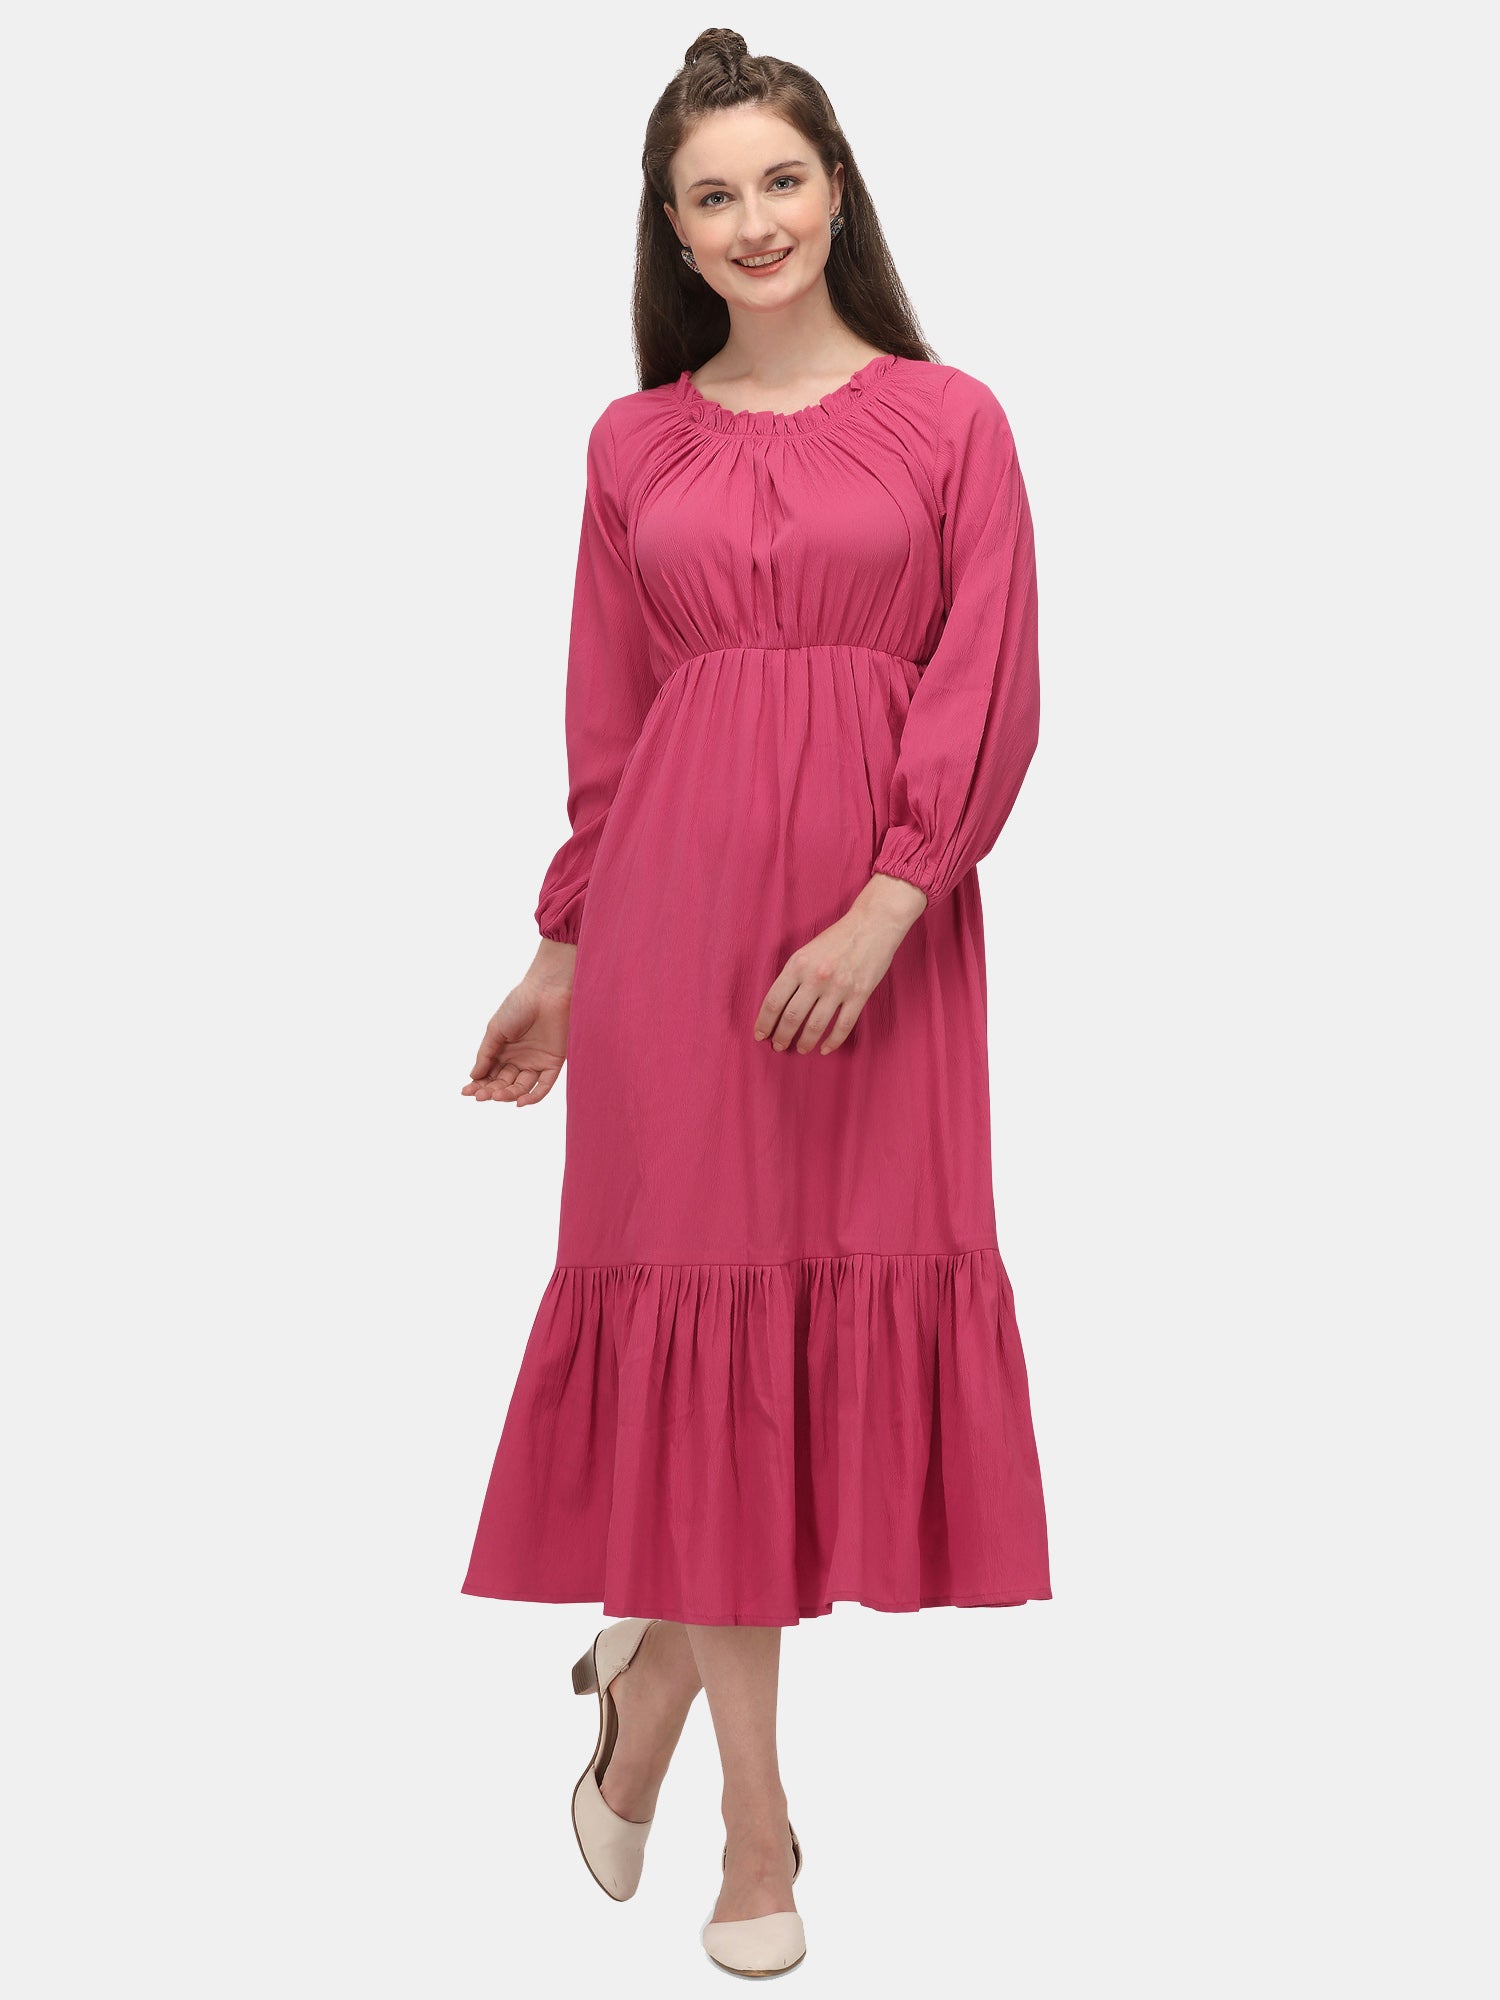 Women's Pink Long Ankle Length Tunic Dress - MESMORA FASHIONS